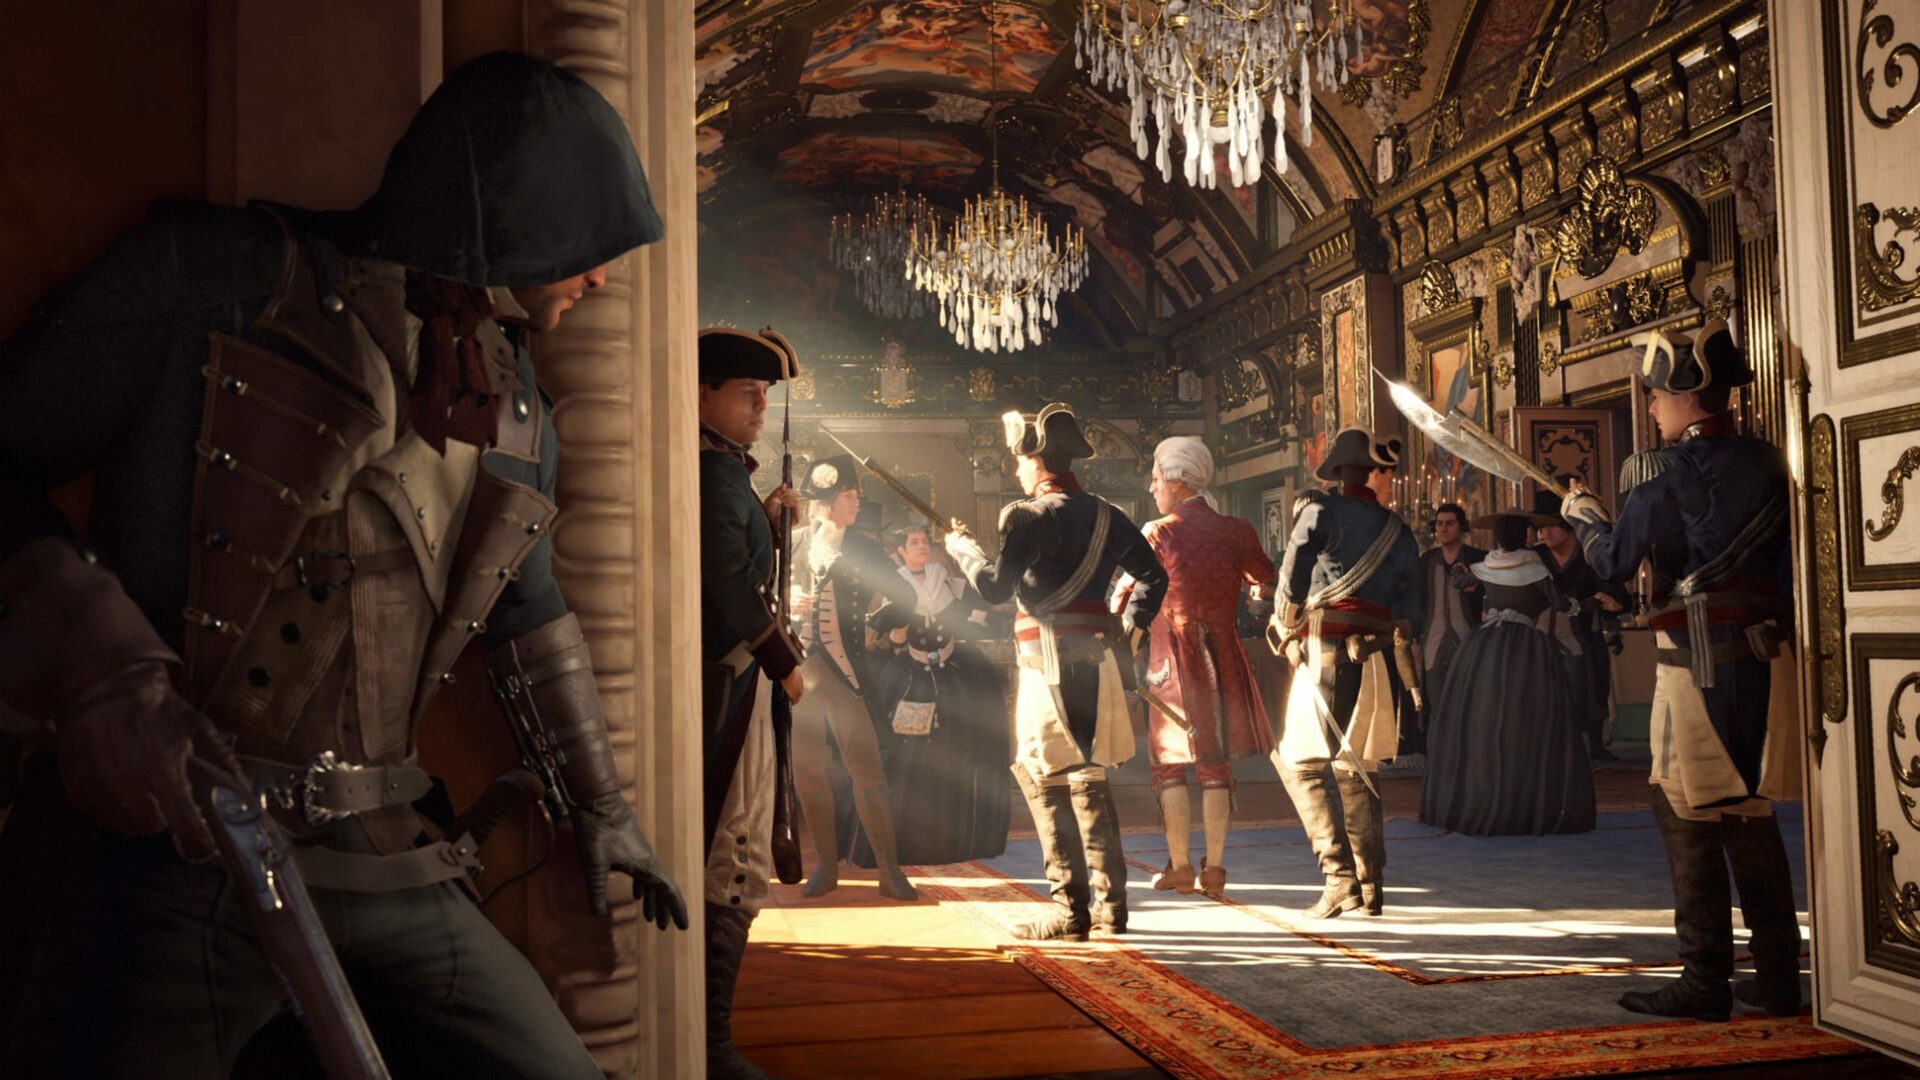 Assassins Creed Unity Jogo Xbox One Mídia Digital - Playce - Games & Gift  Cards 